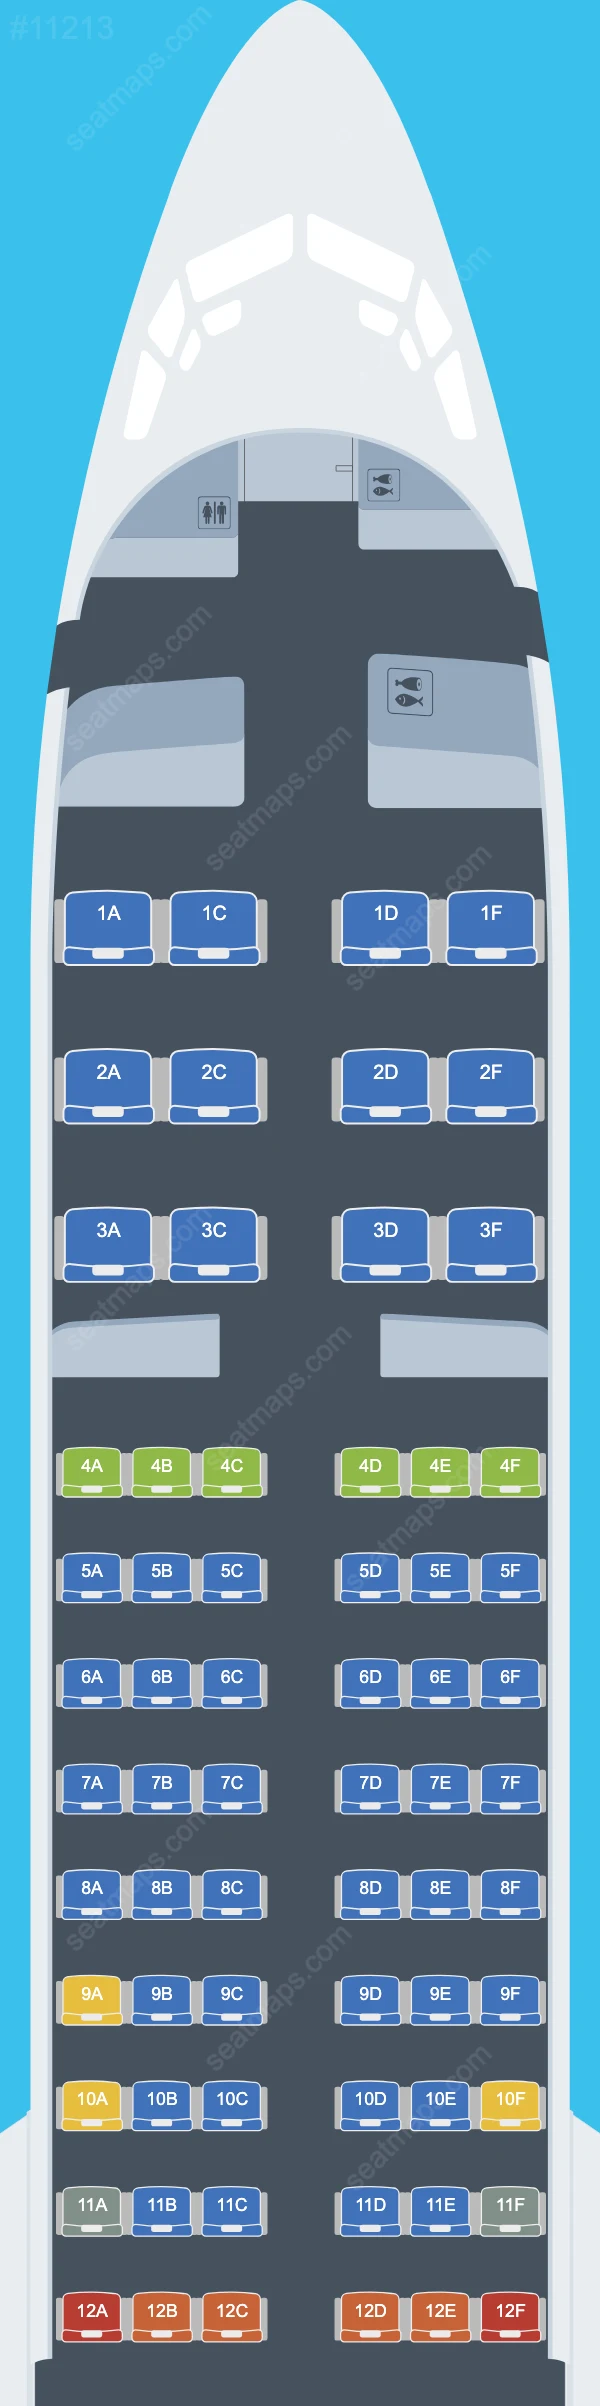 Akasa Air Boeing 737 MAX 8 Seat Maps 737 MAX 8 V.2